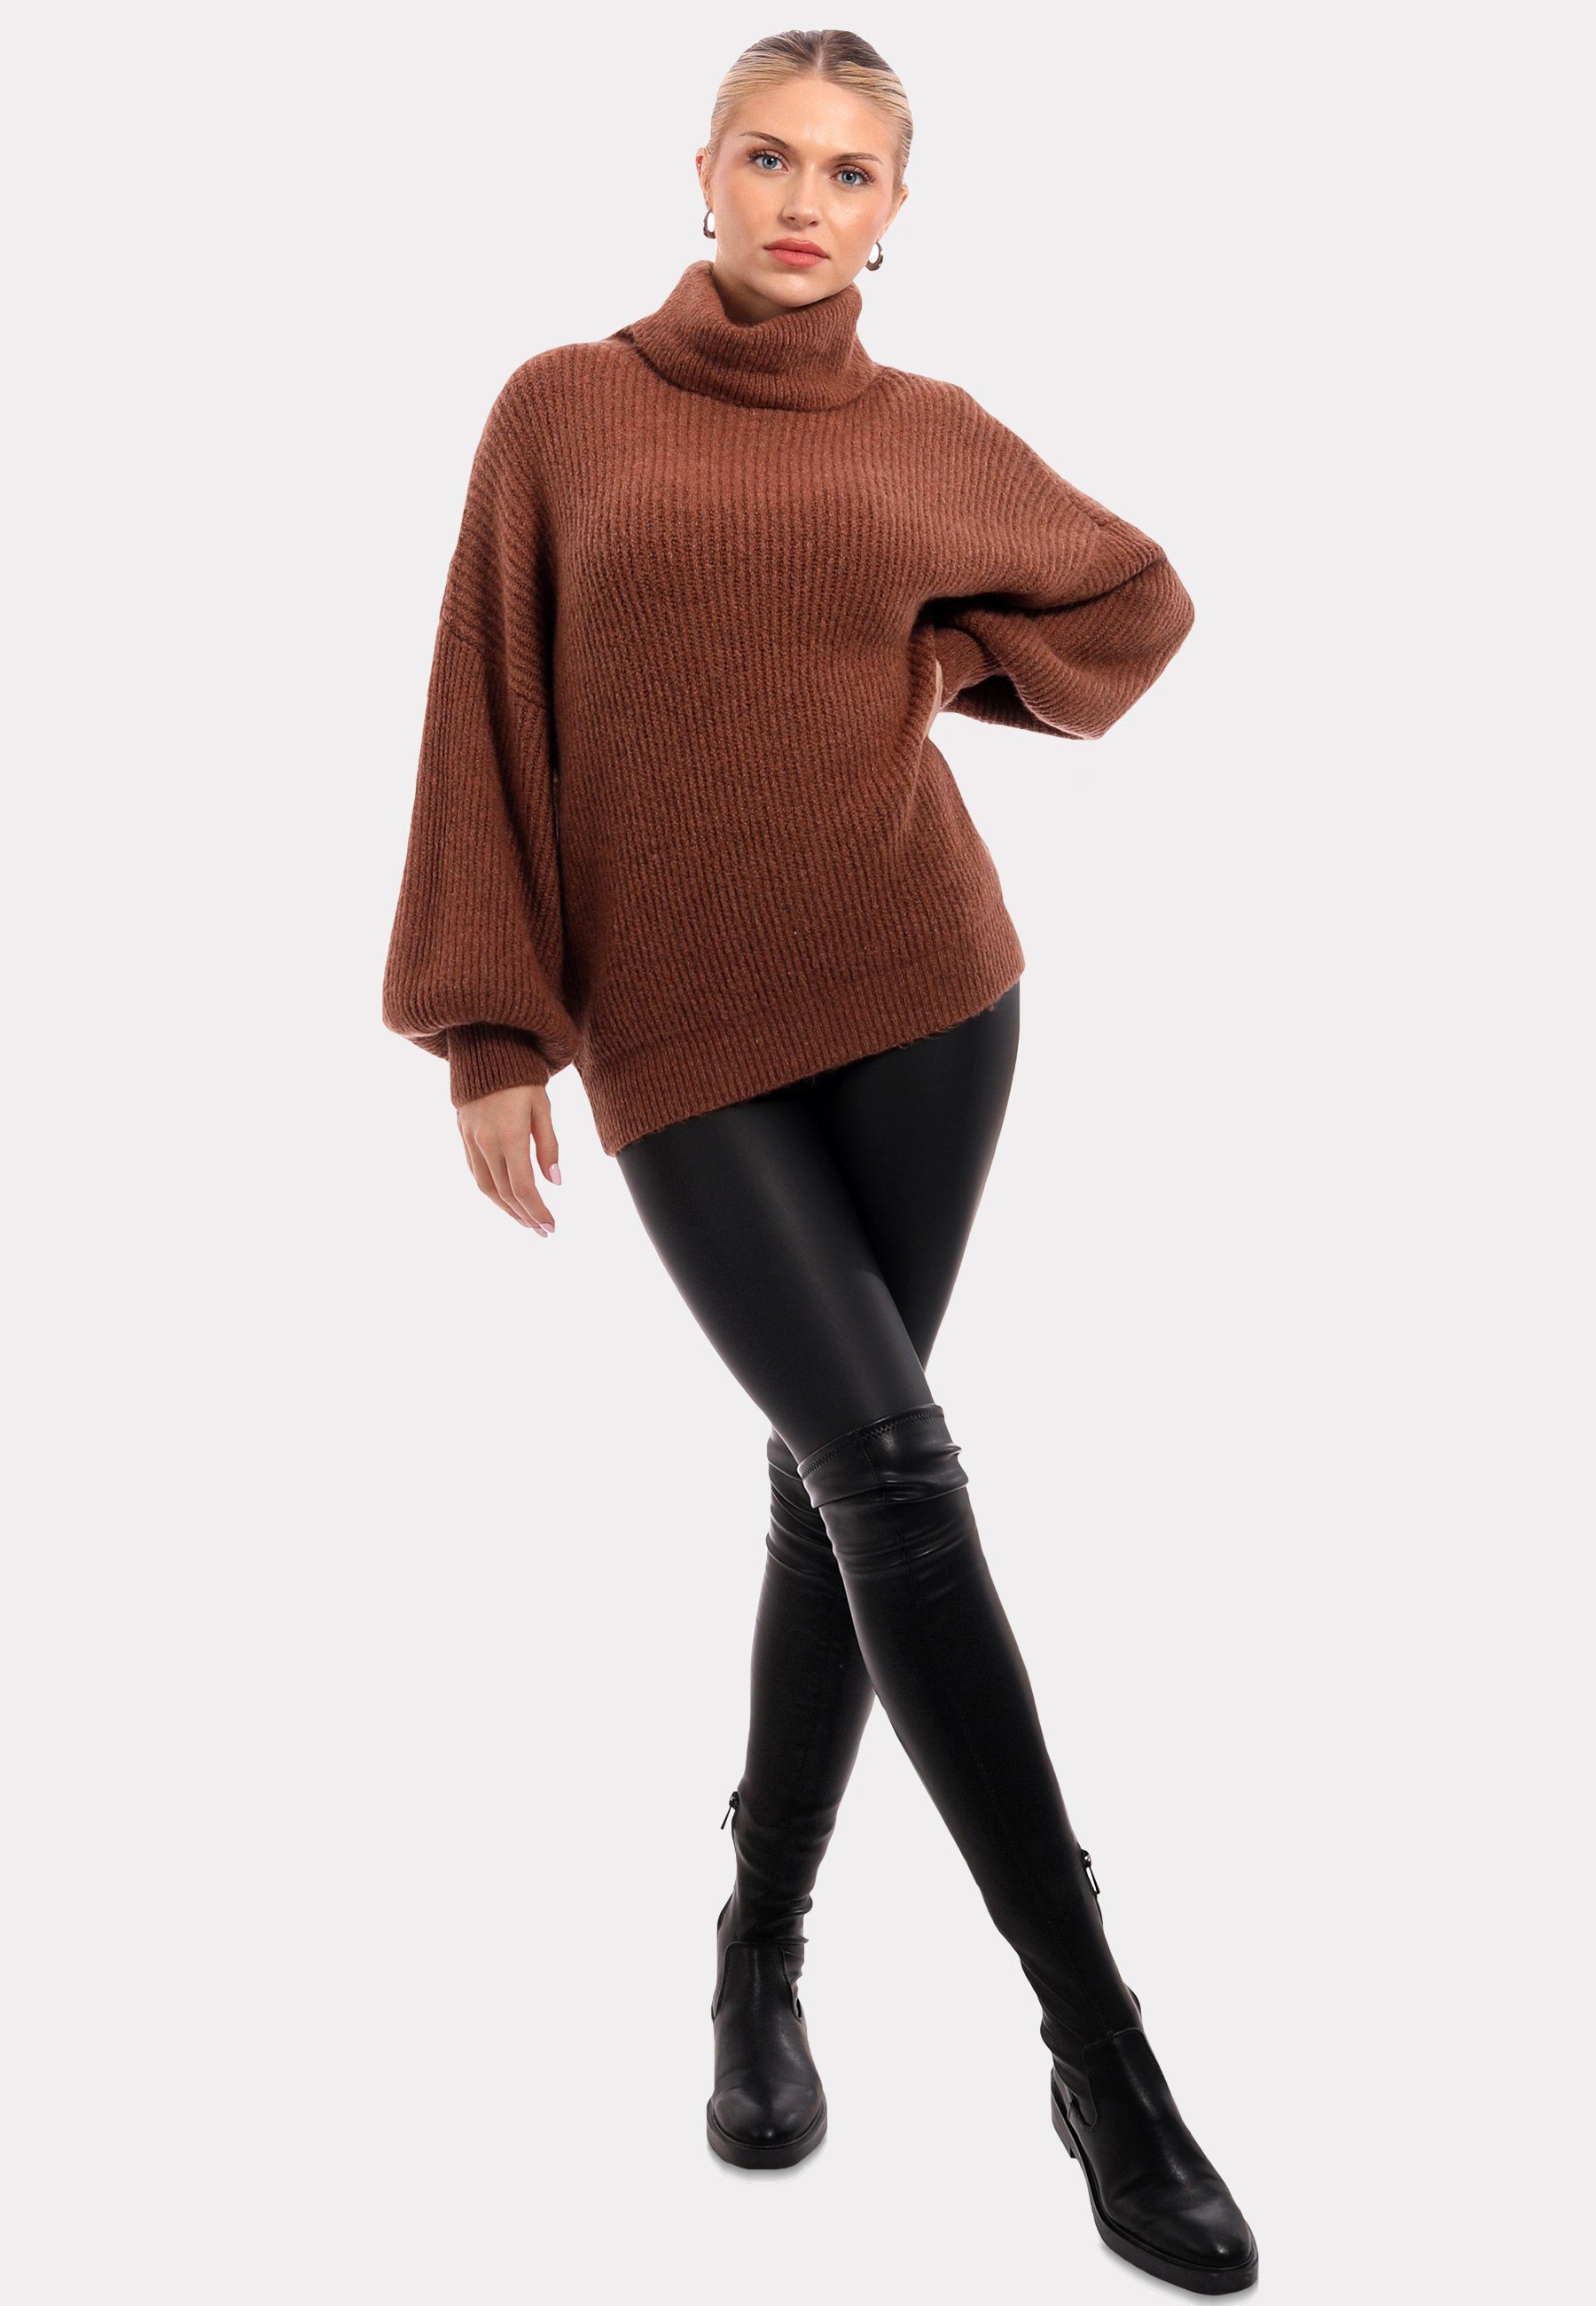 Rollkragen Rollkragenpullover Casual in Winter Pullover & Unifarbe YC Camel Style mit Fashion Sweater